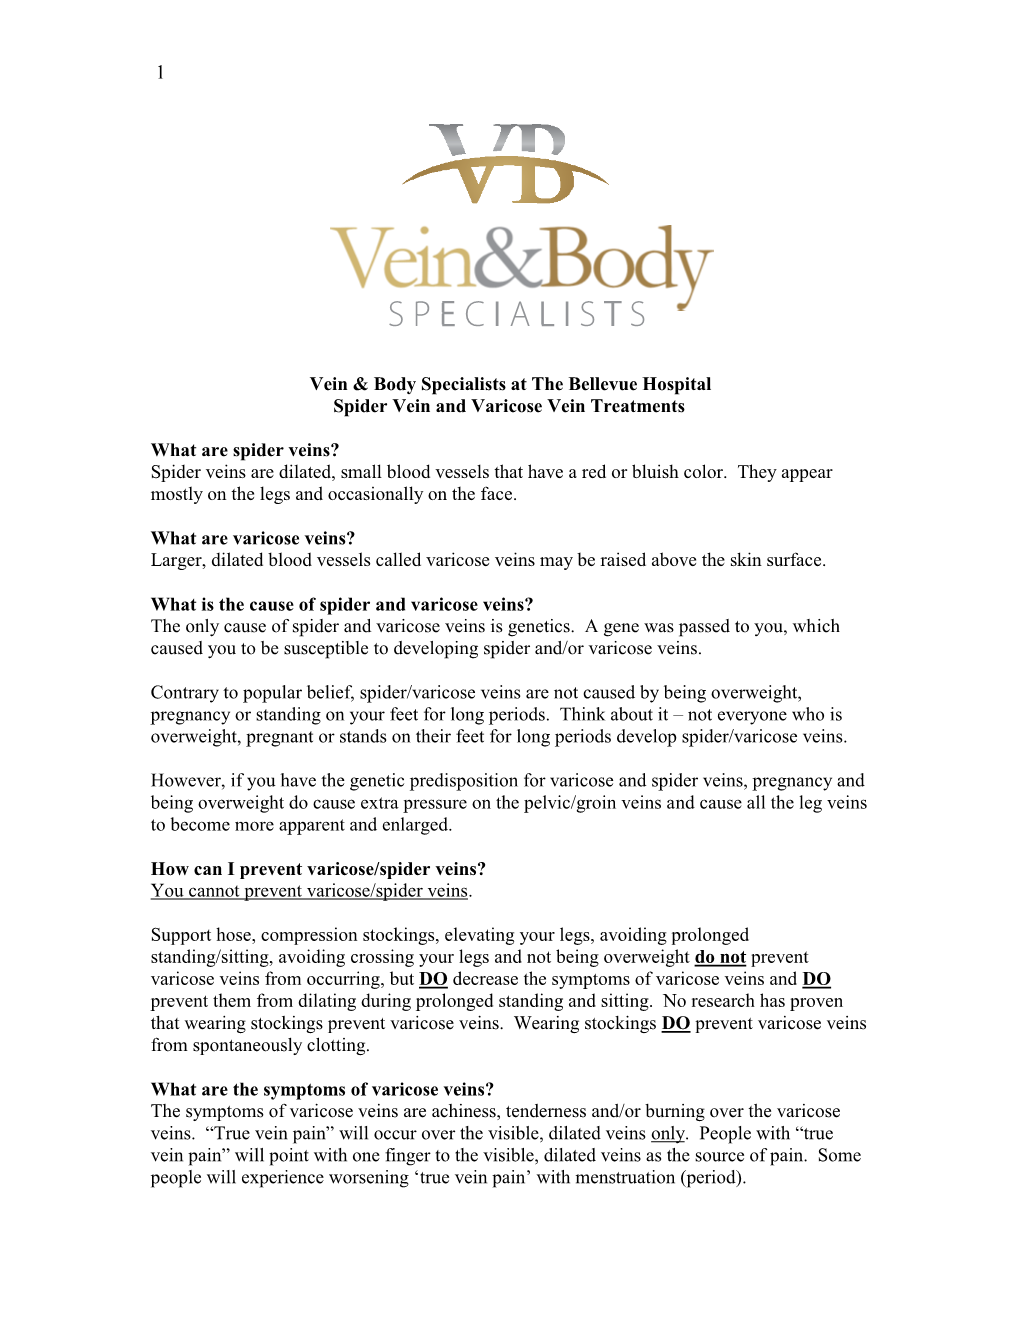 Spider Vein and Varicose Vein Treatments